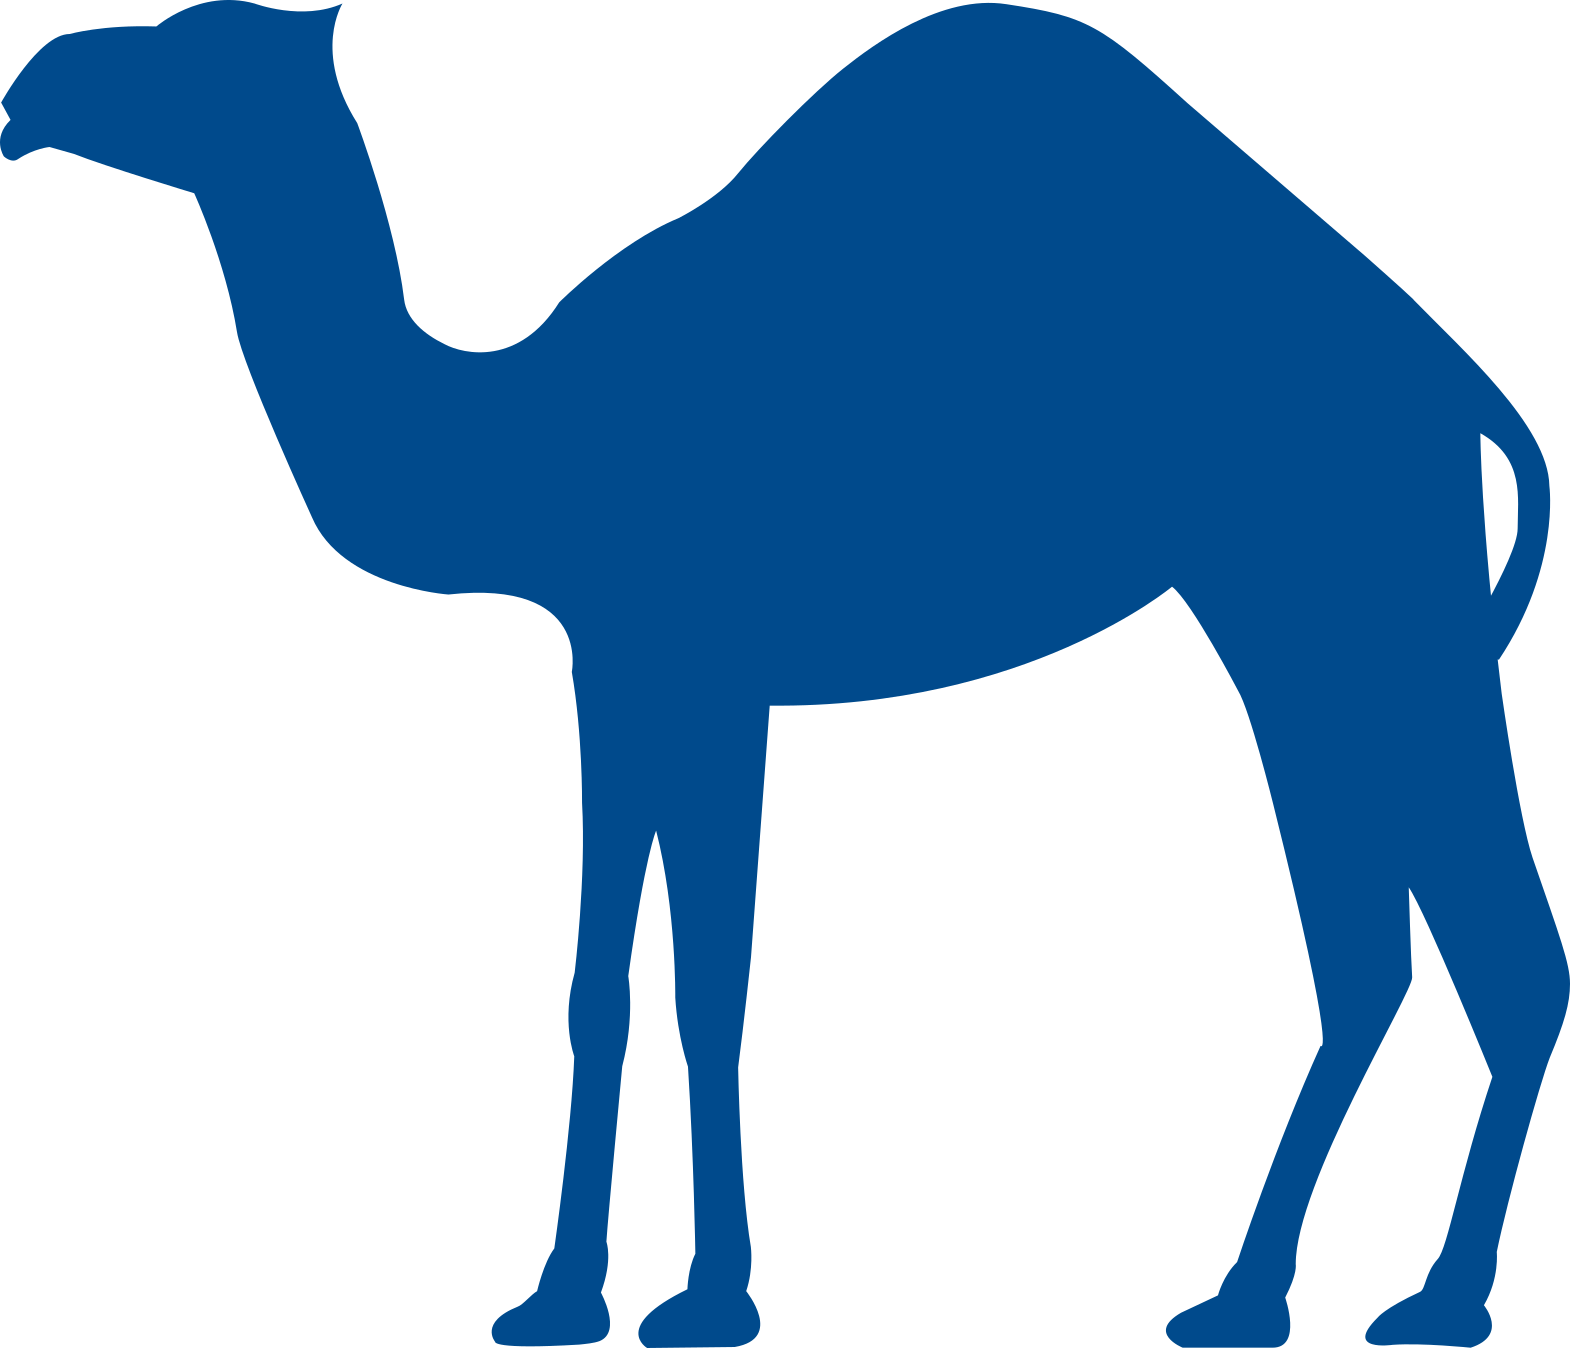 National Bank of Kuwait logo (transparent PNG)